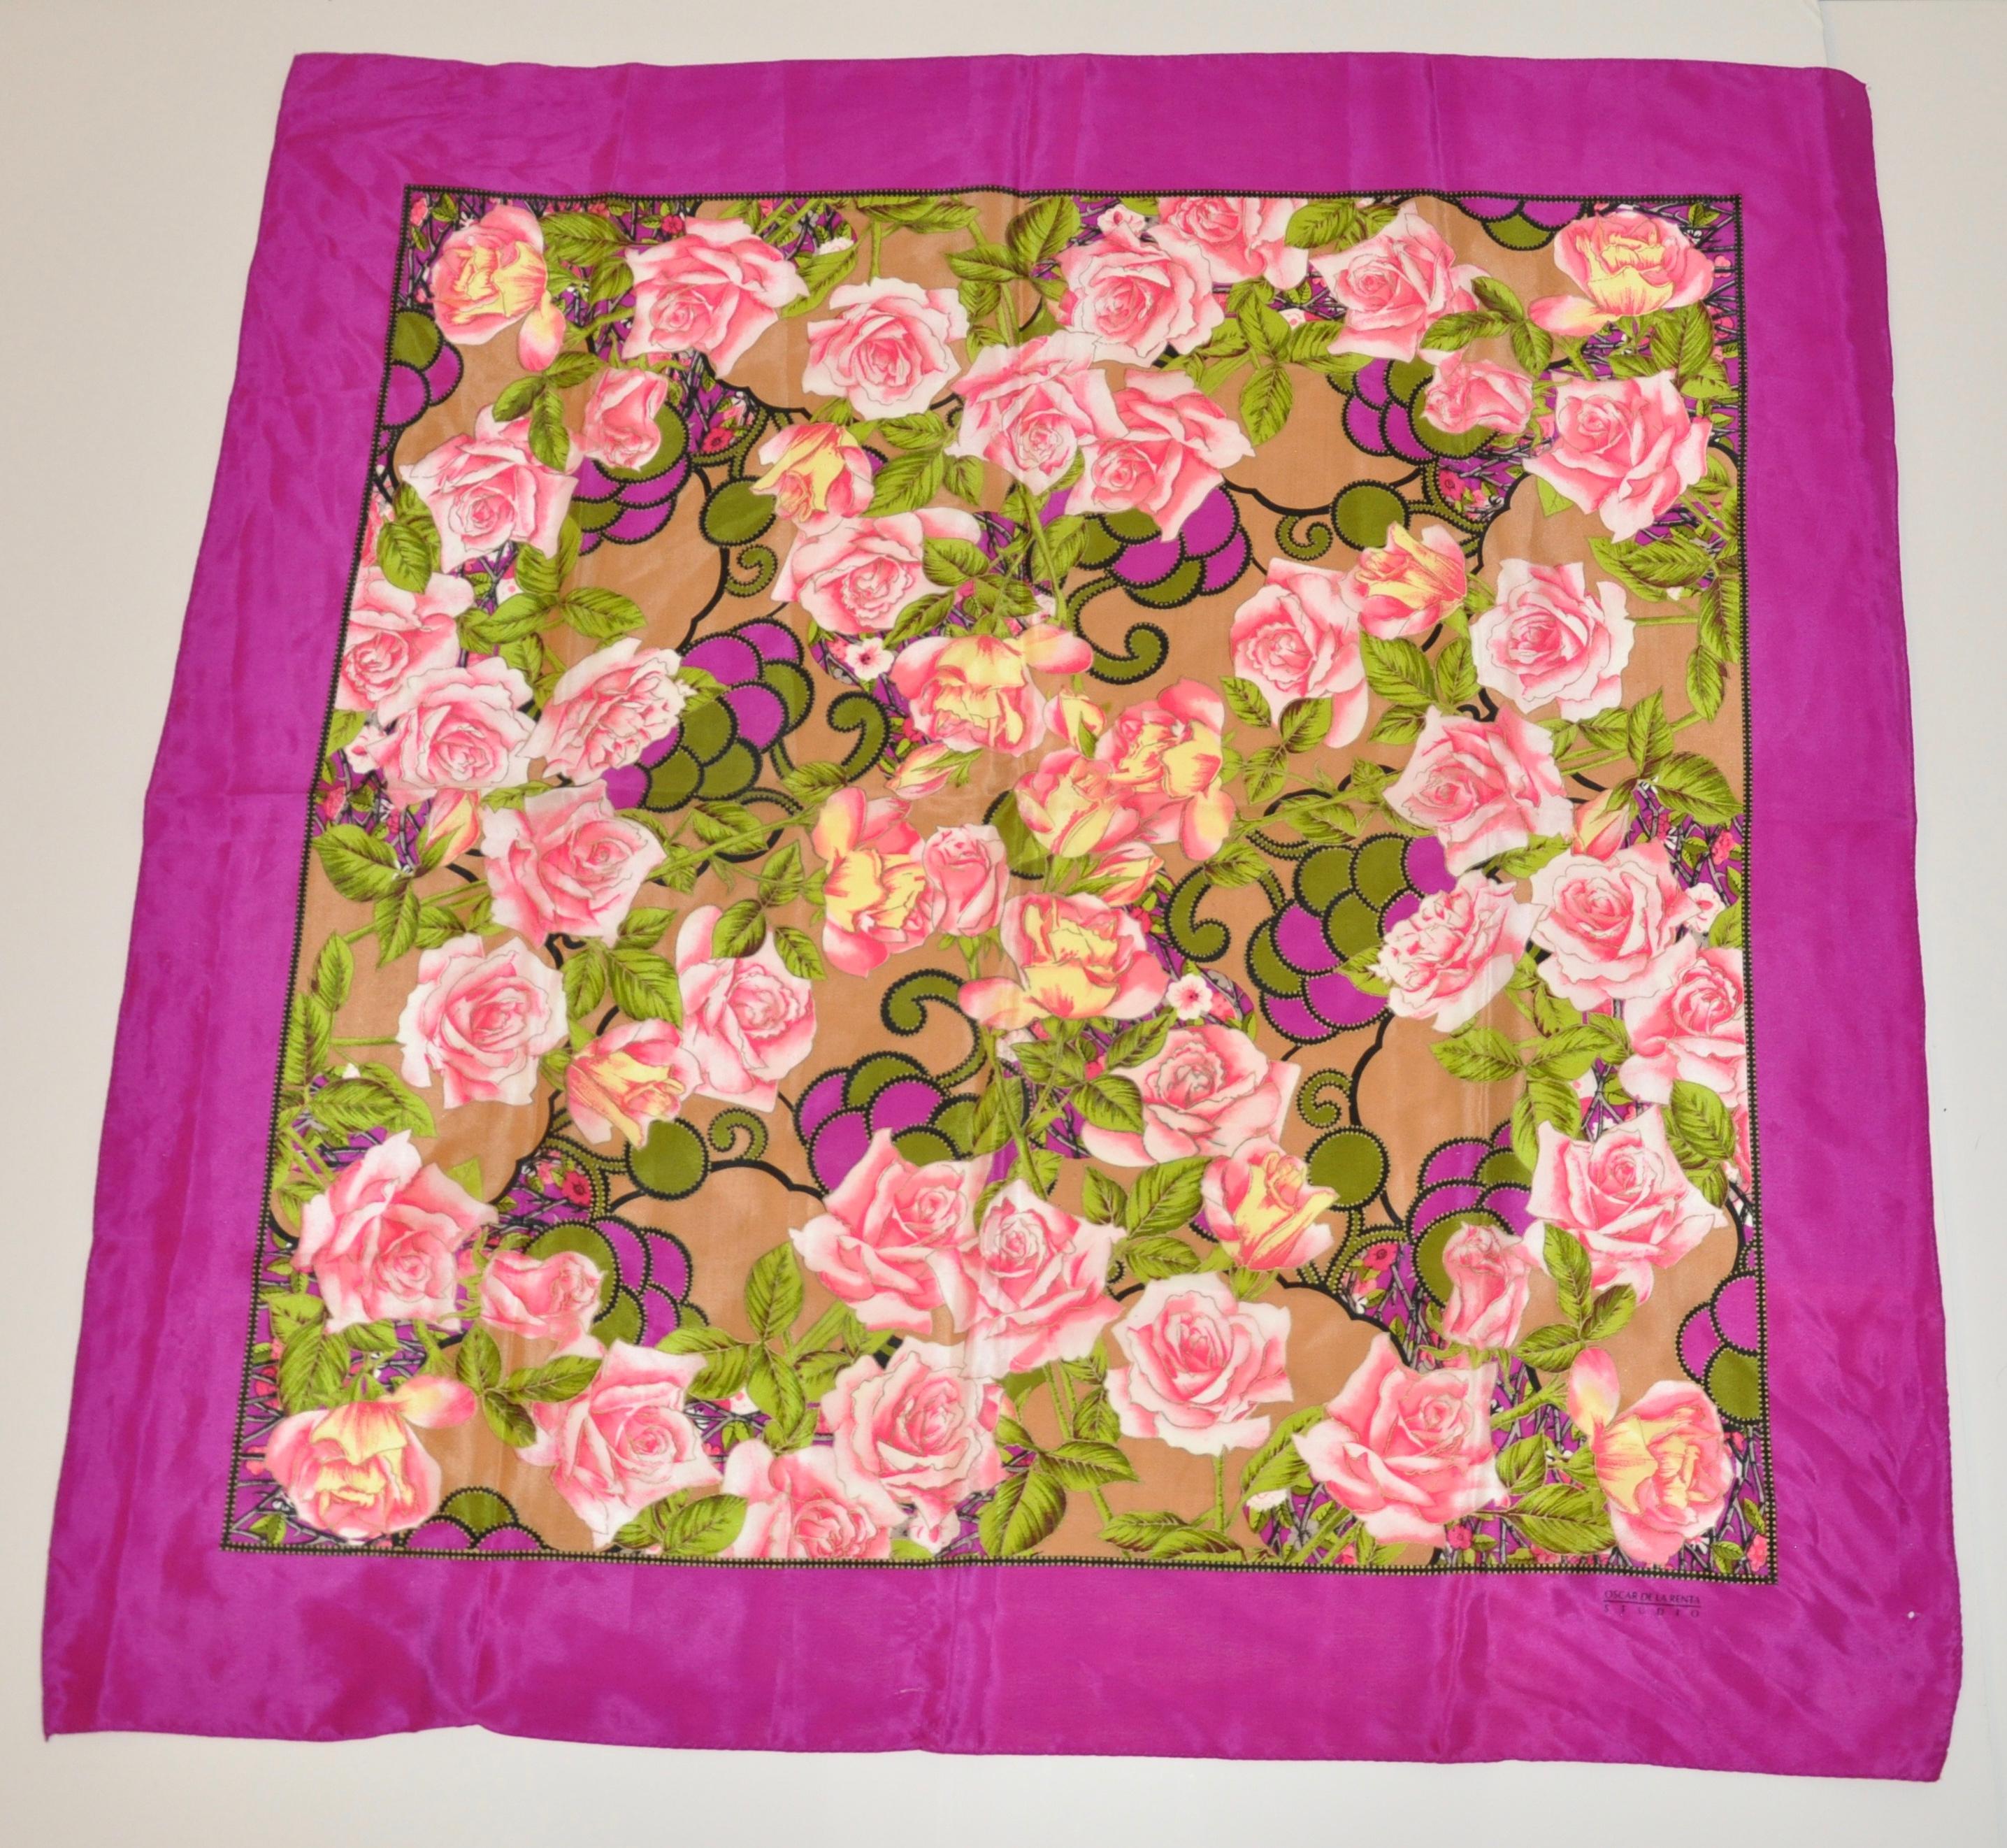        Oscar de la Renta wonderful festive silk scarf with bold violet borders surrounding 